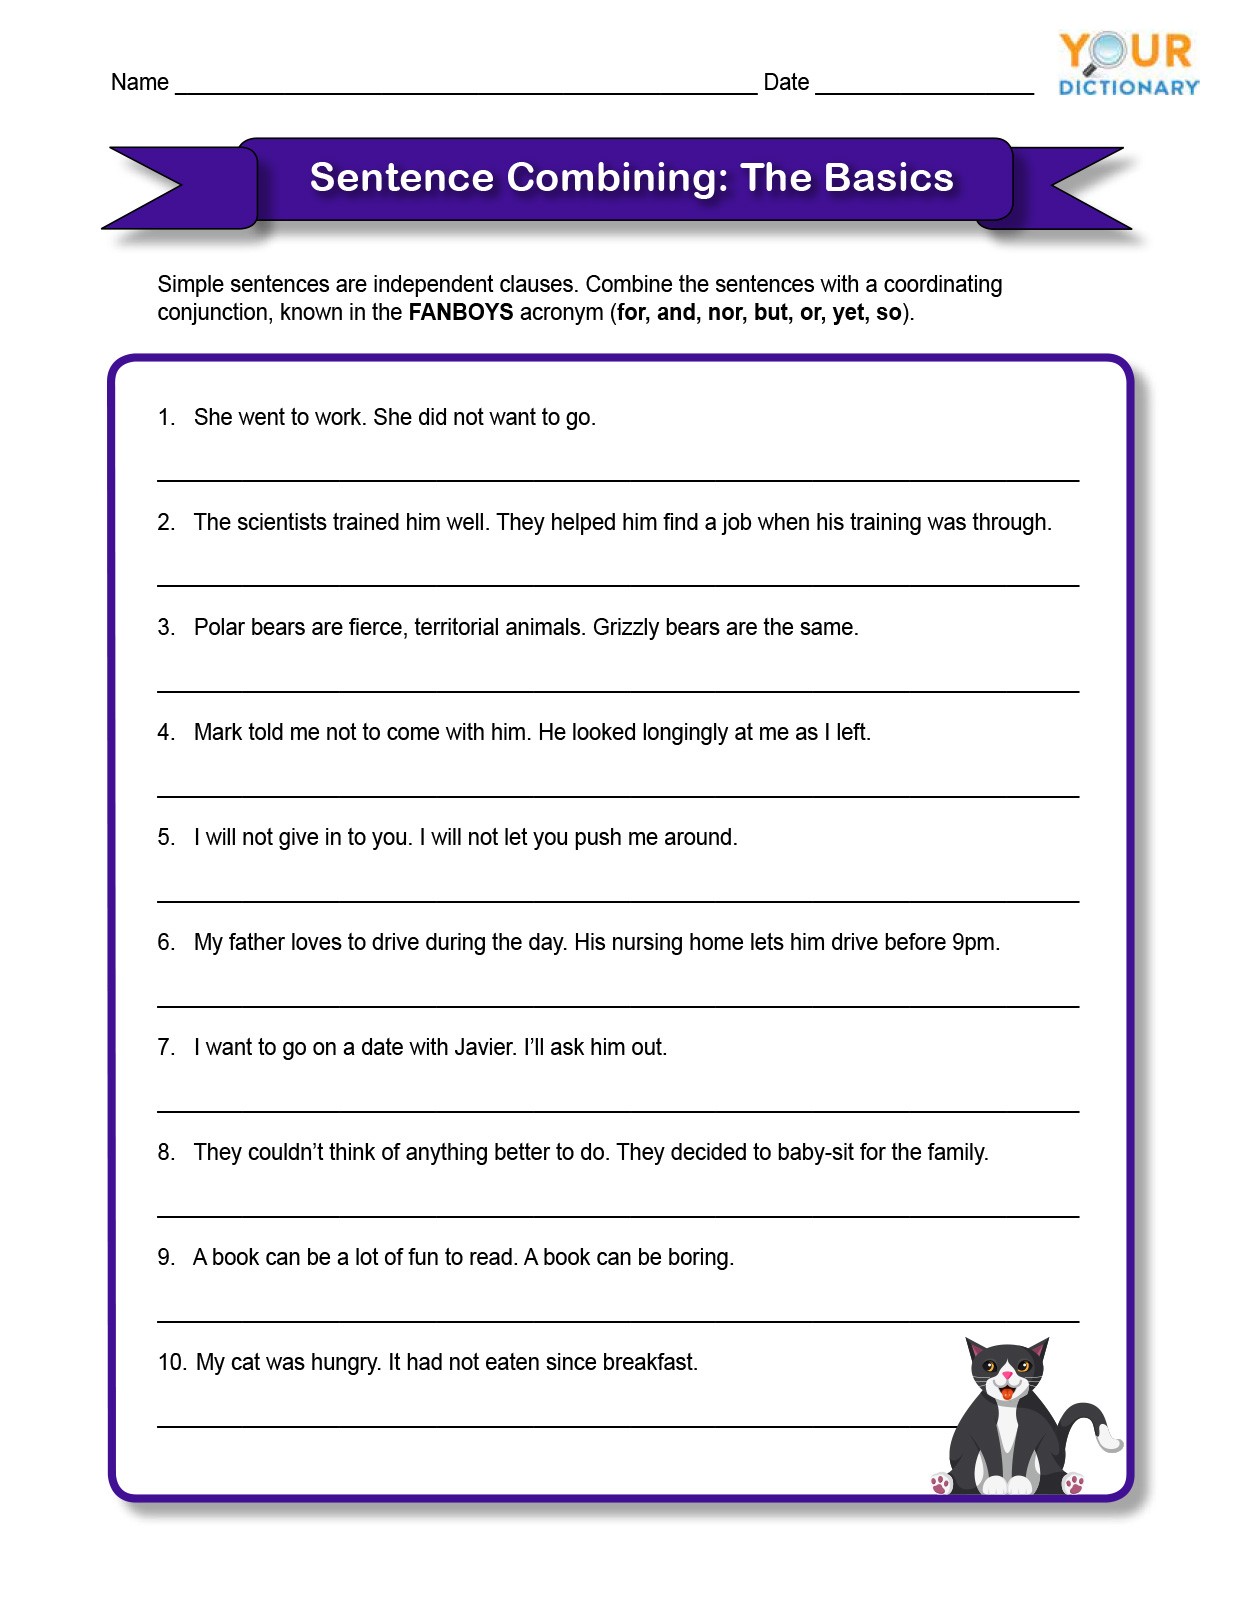 Combining Simple Sentences Worksheet